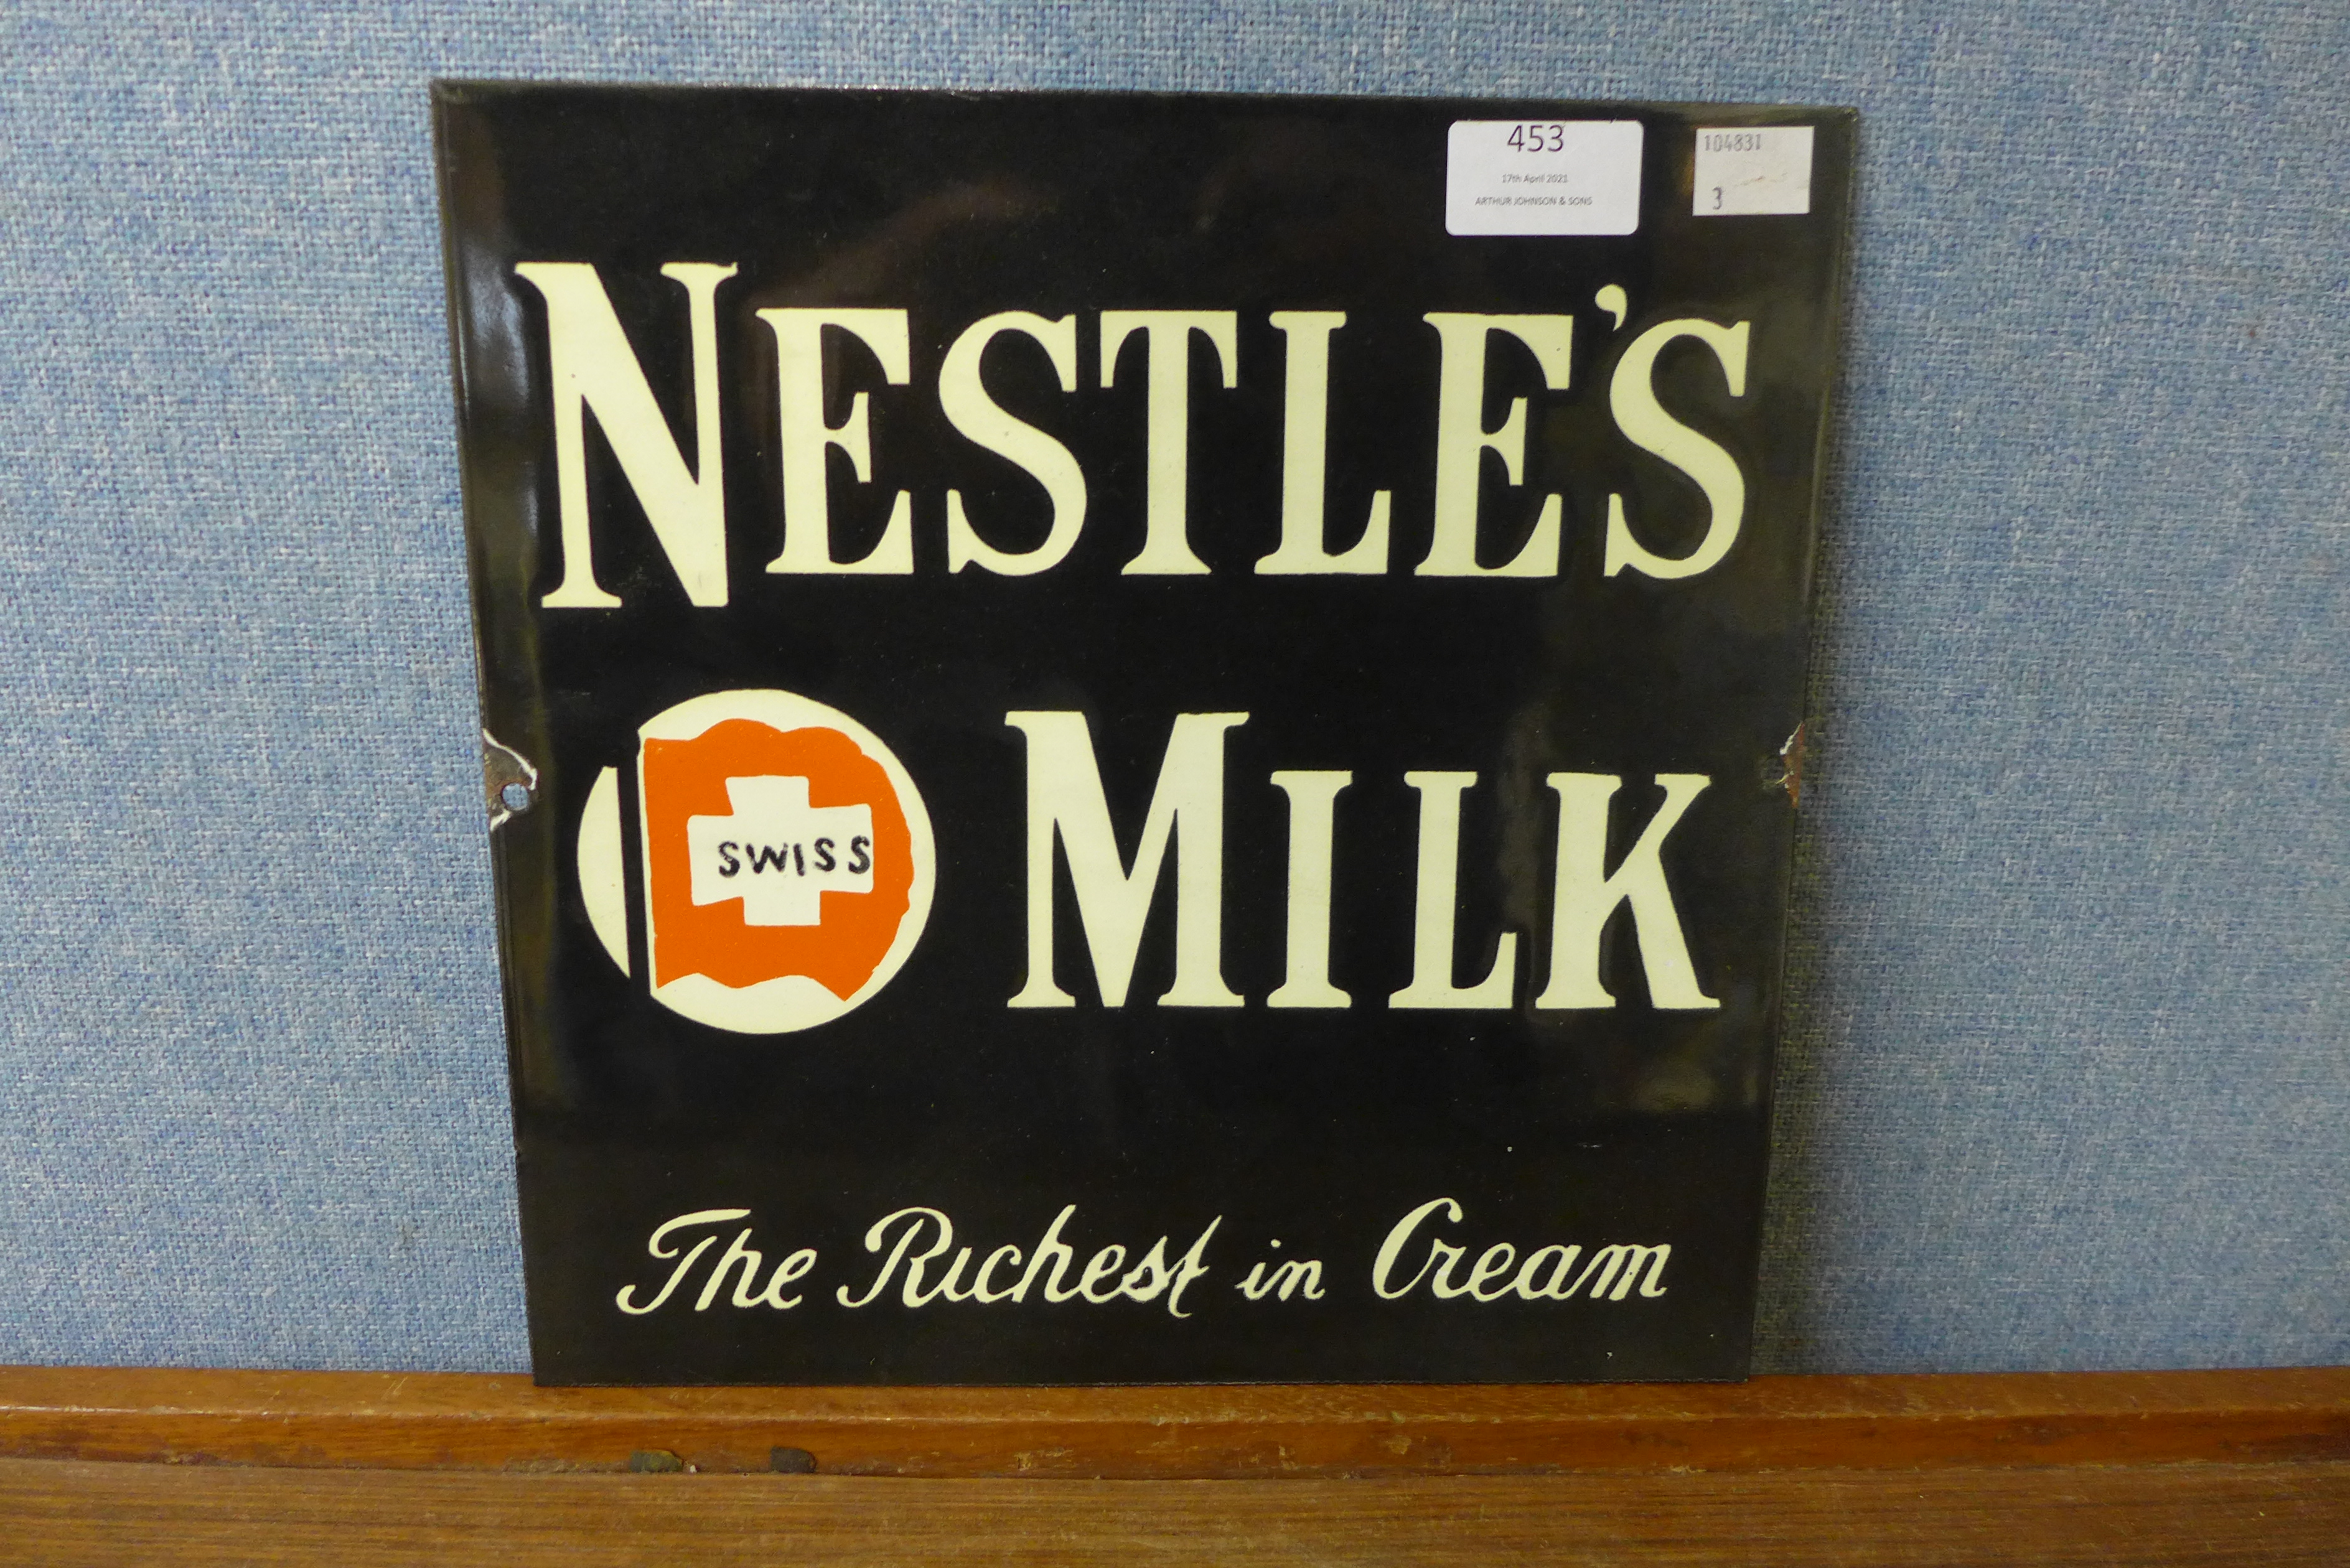 A Nestle's Milk enamelled sign